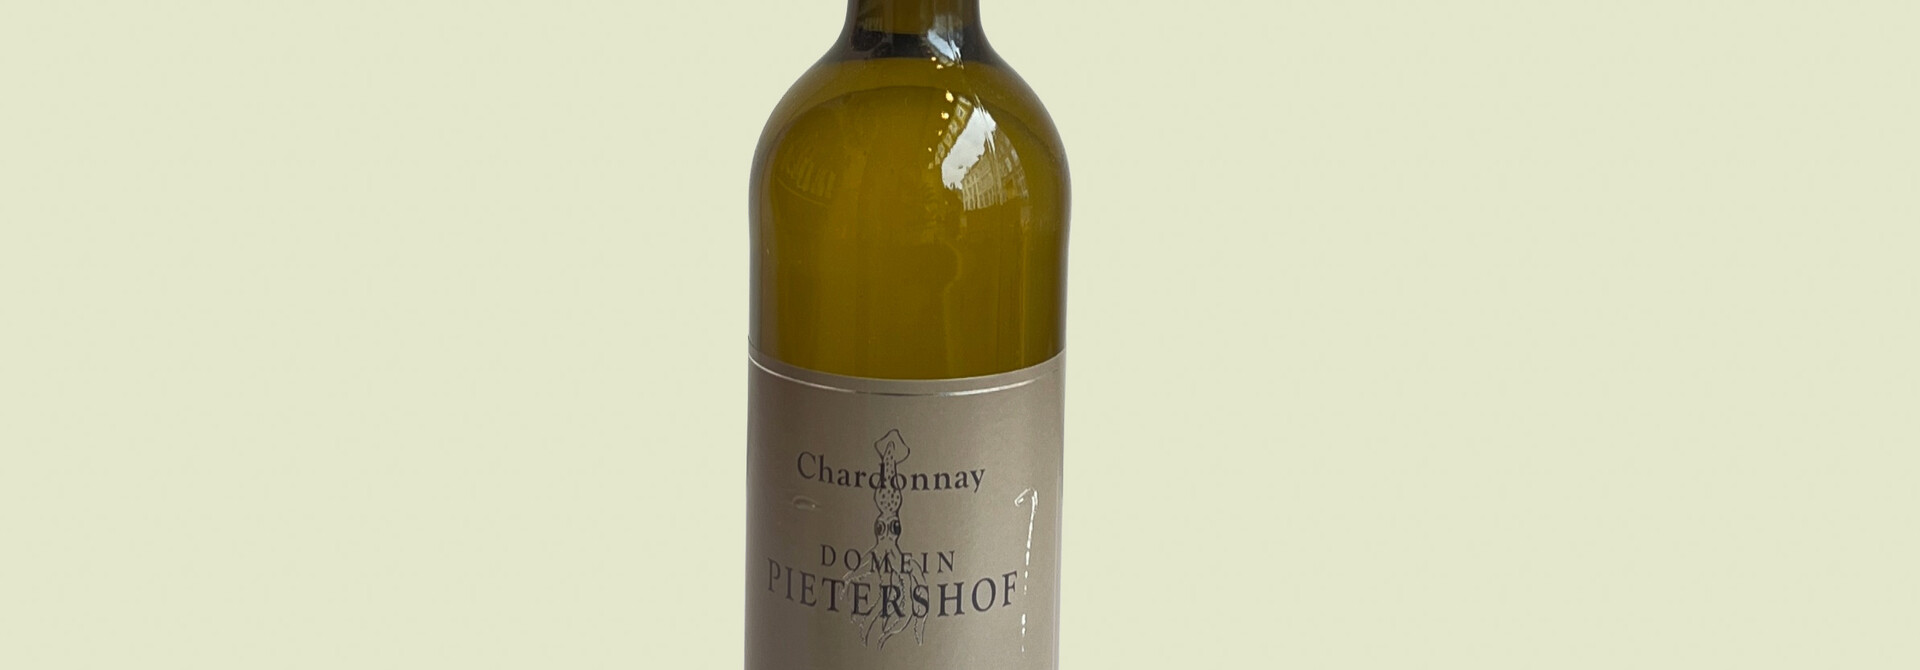 Pietershof Chardonnay 2020